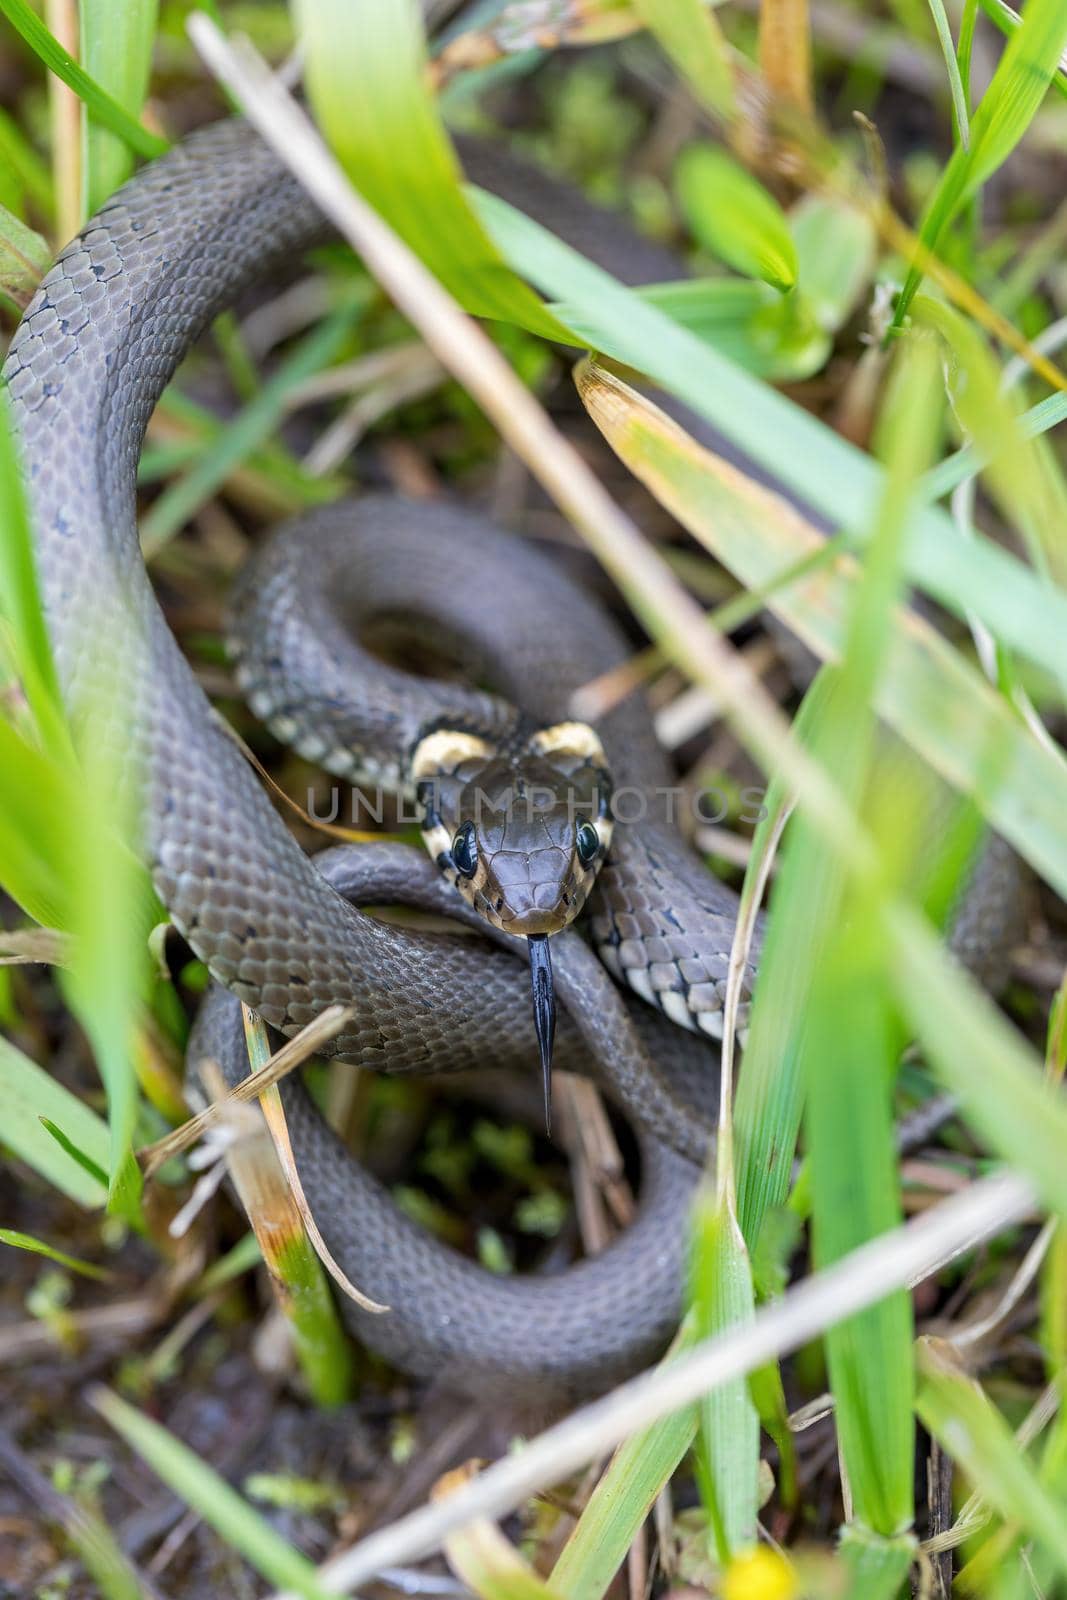 harmless small snake, grass snake, Natrix natrix by artush